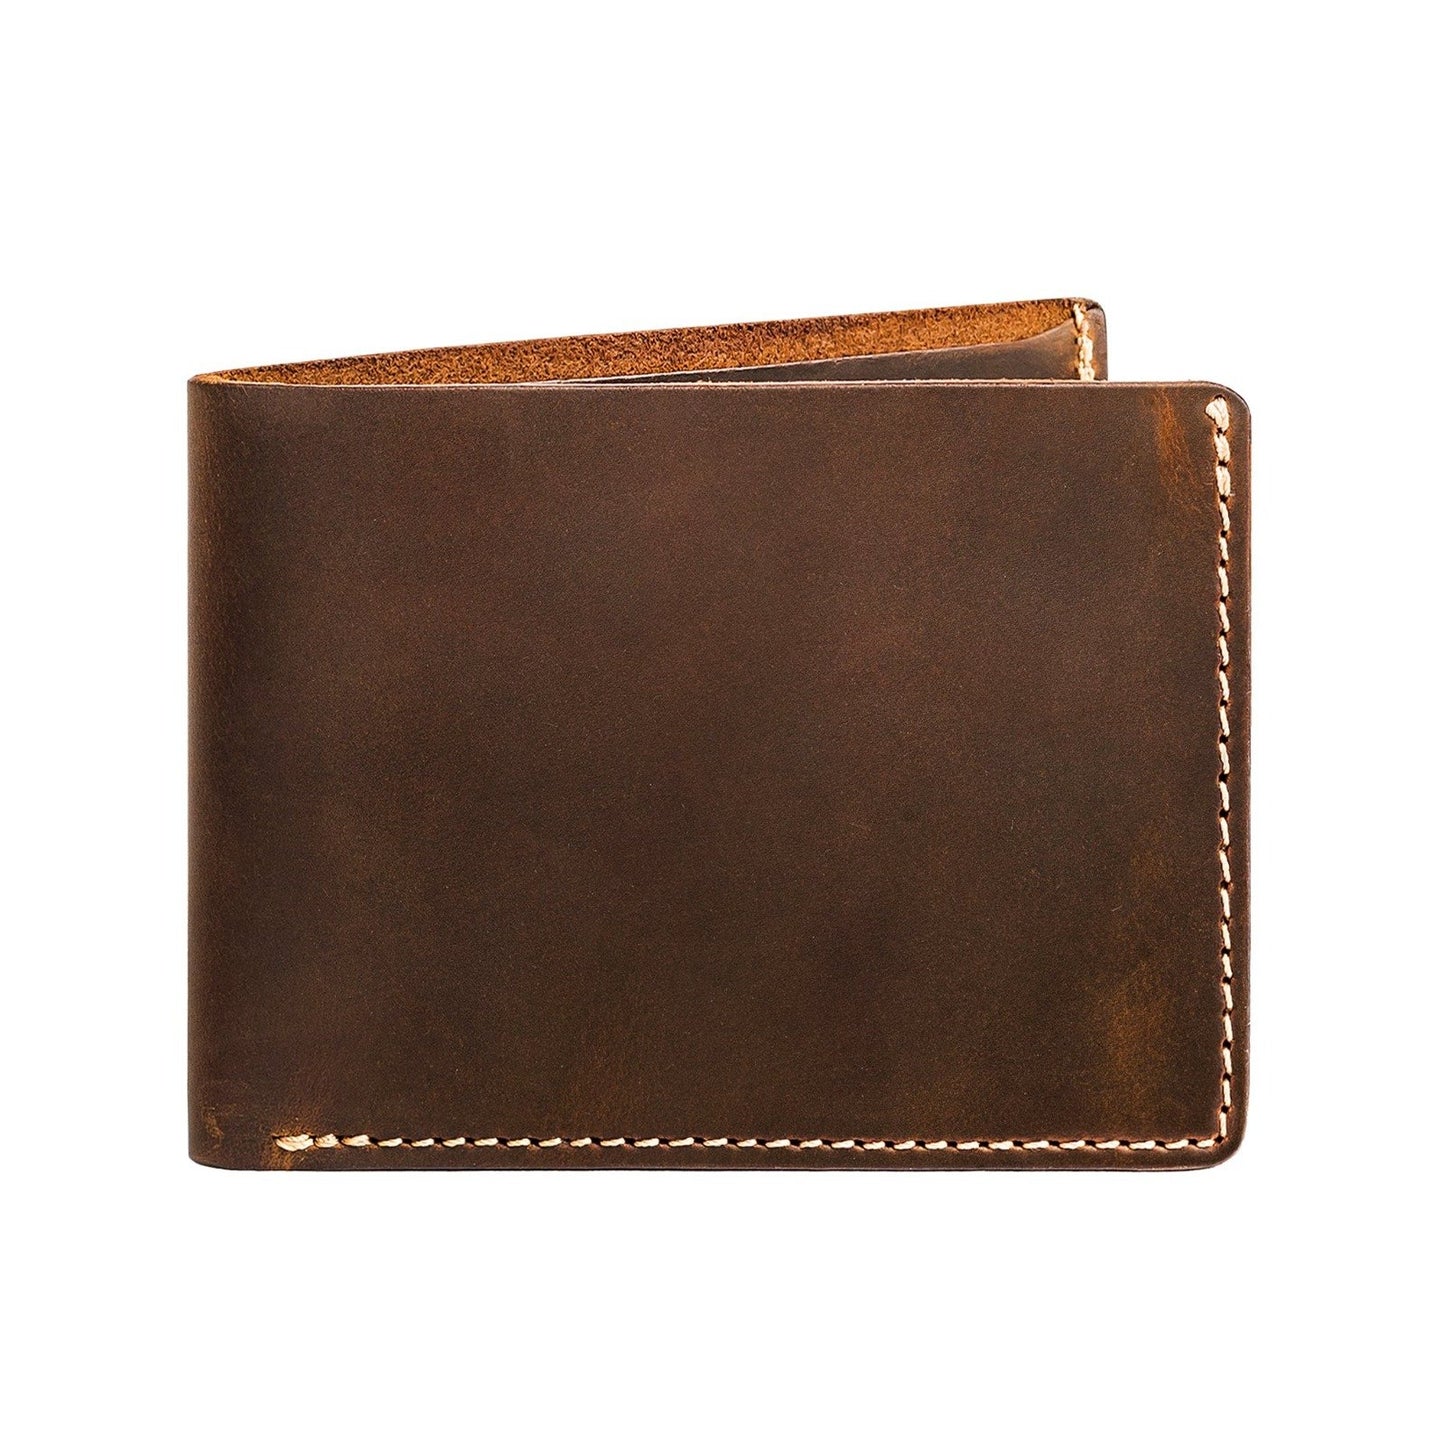 Mens Leather Wallet Brown Leather Wallet Men's Wallet 